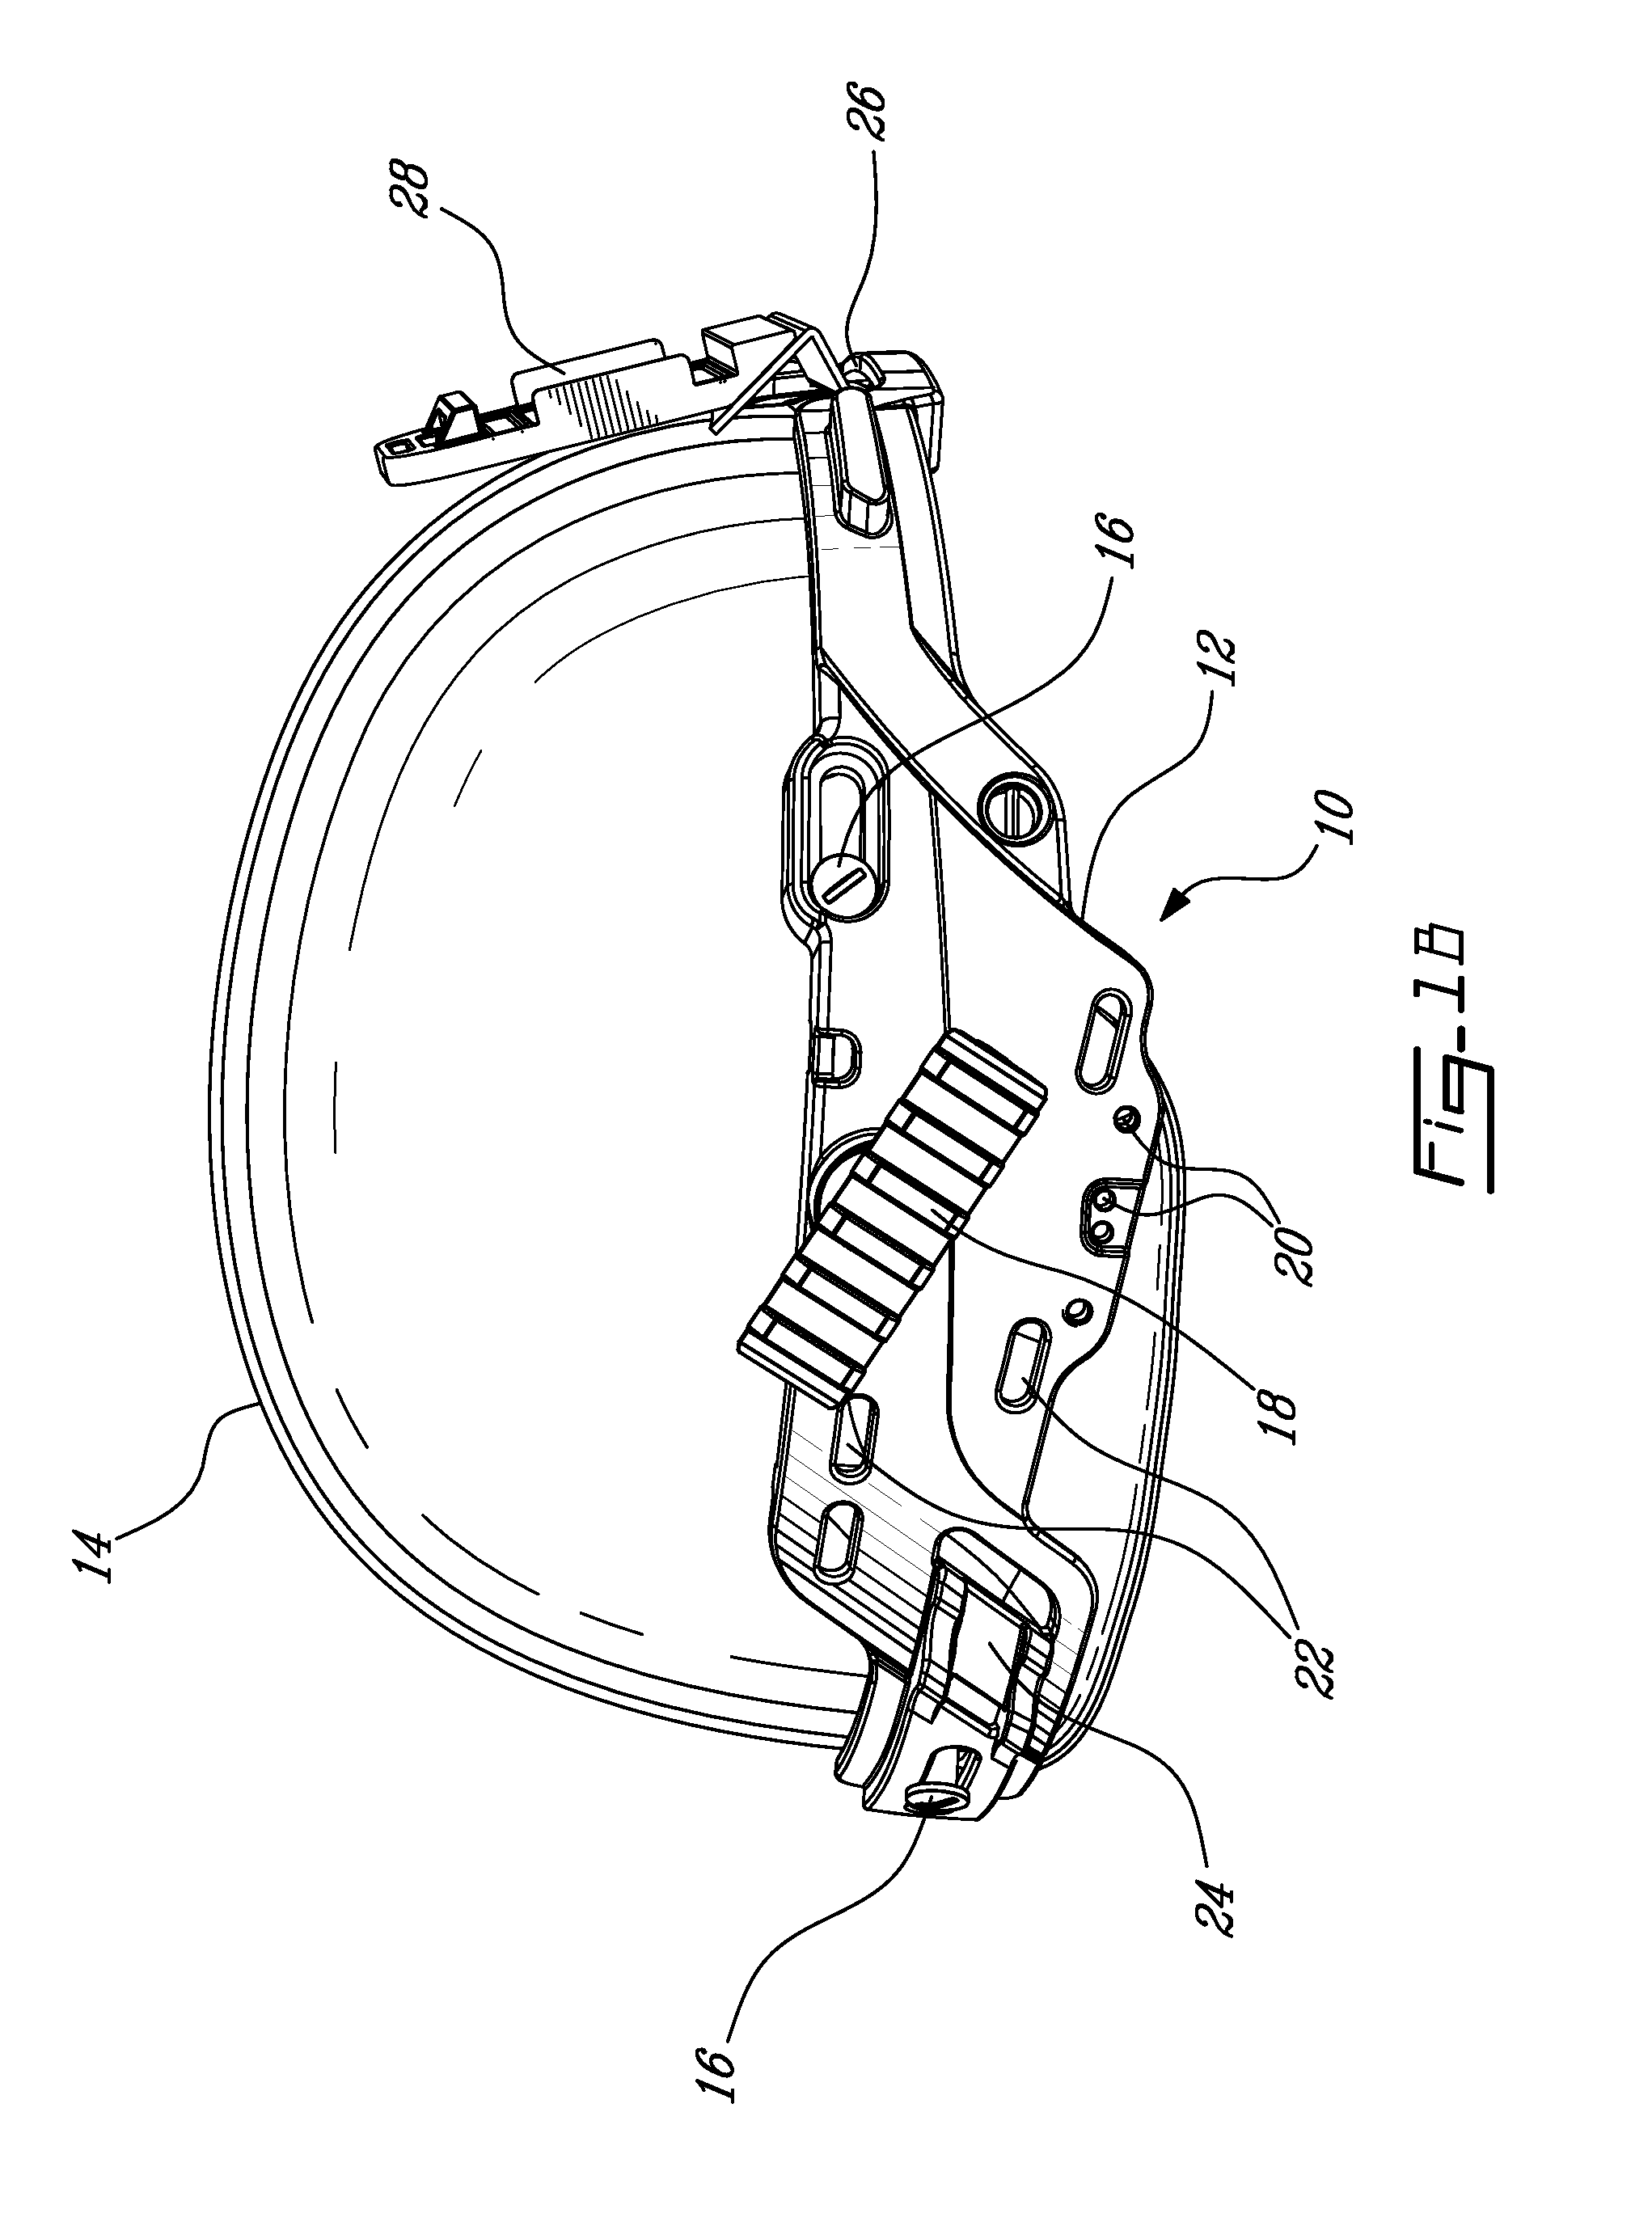 Adaptor platform for helmet